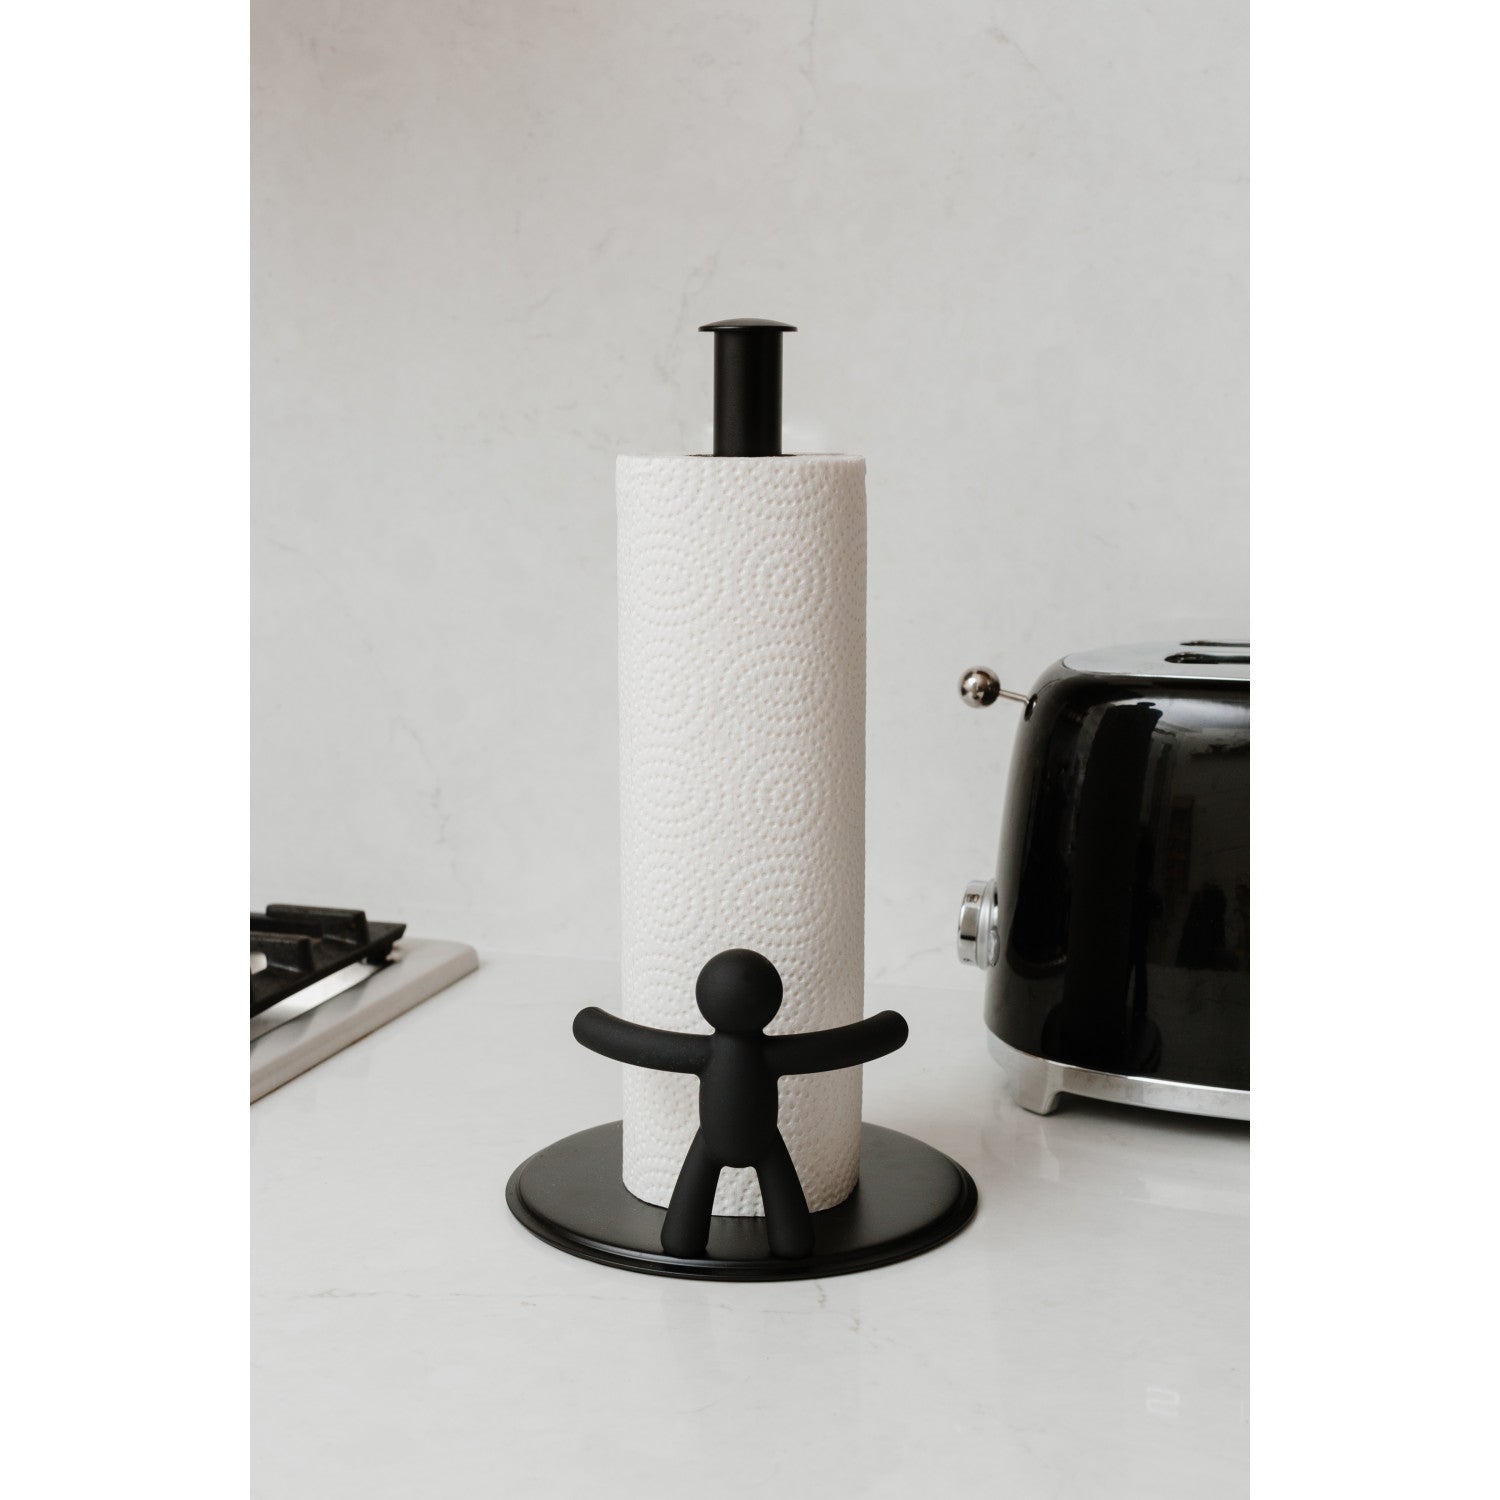 OGA - Home Design Products. Soporte papel cocina negro BUDDY